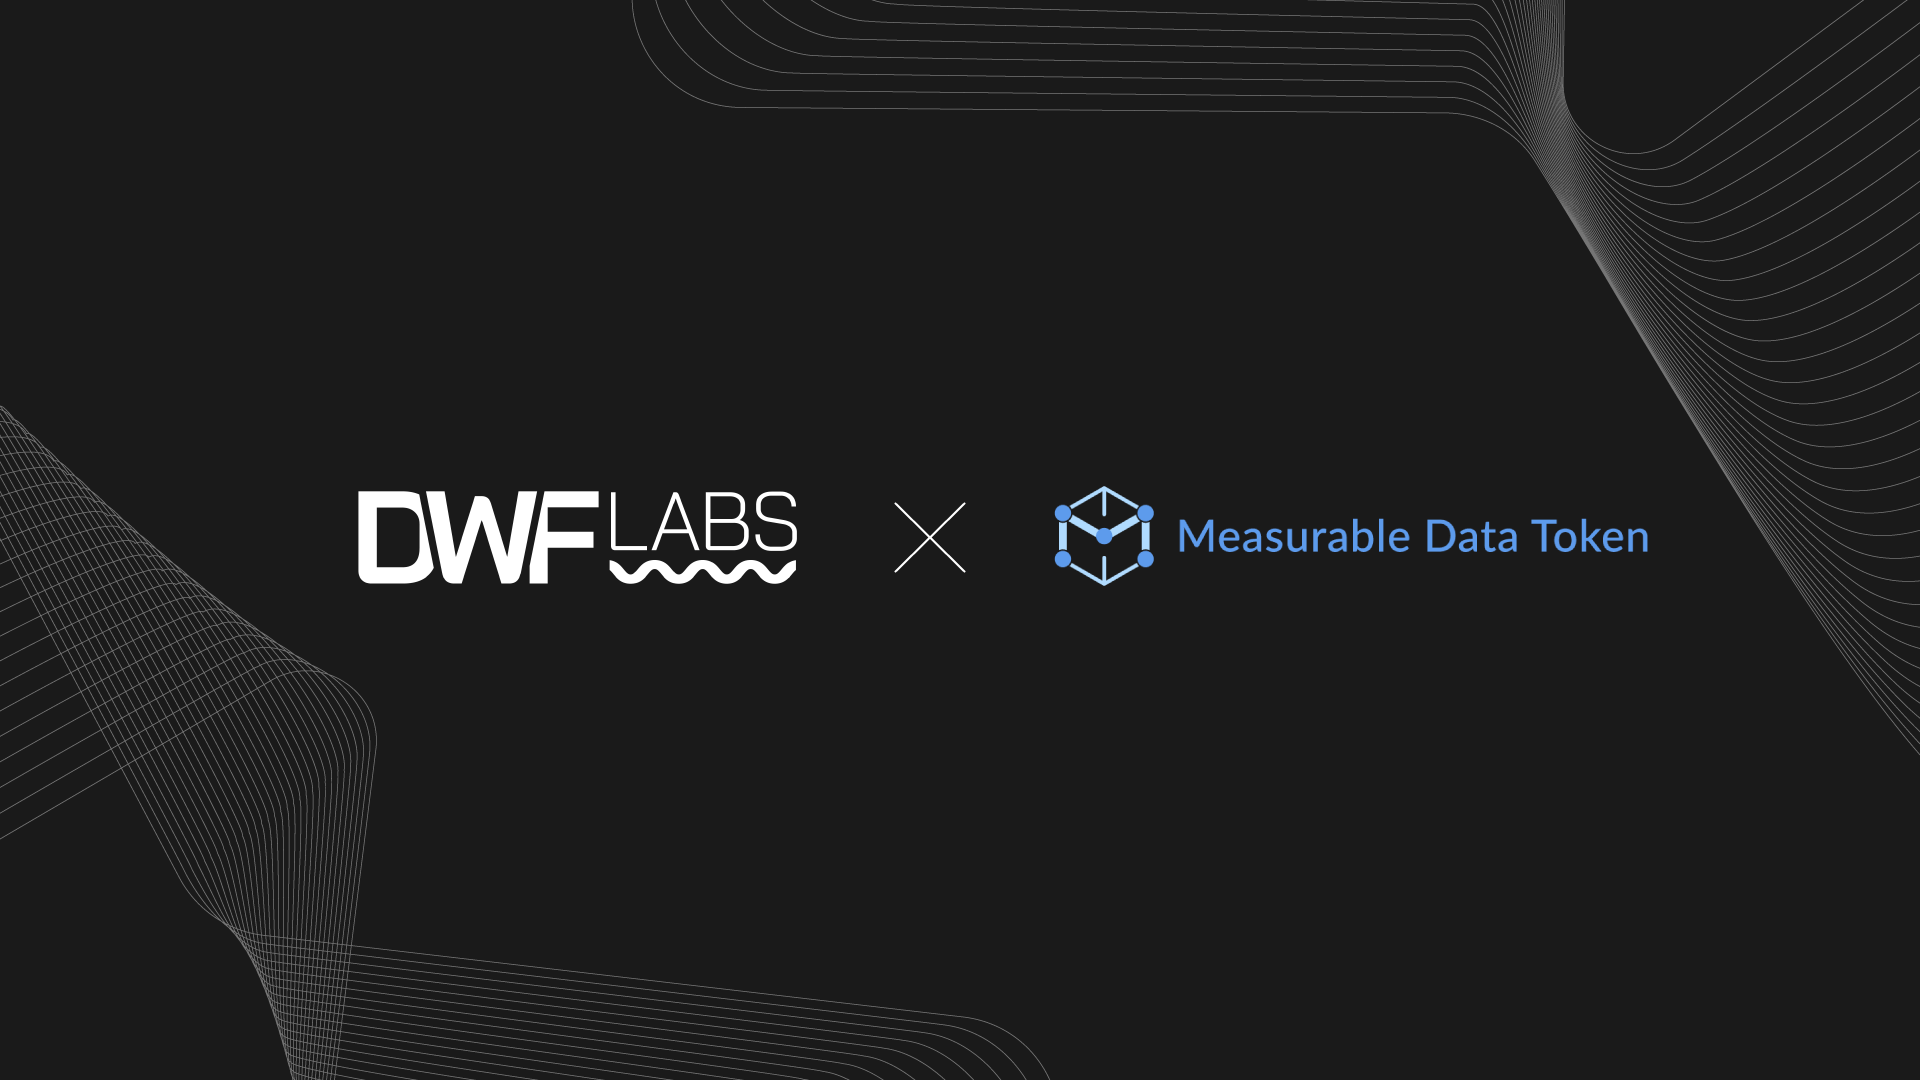 Measurable Data Token and DWF Labs form strategic partnership